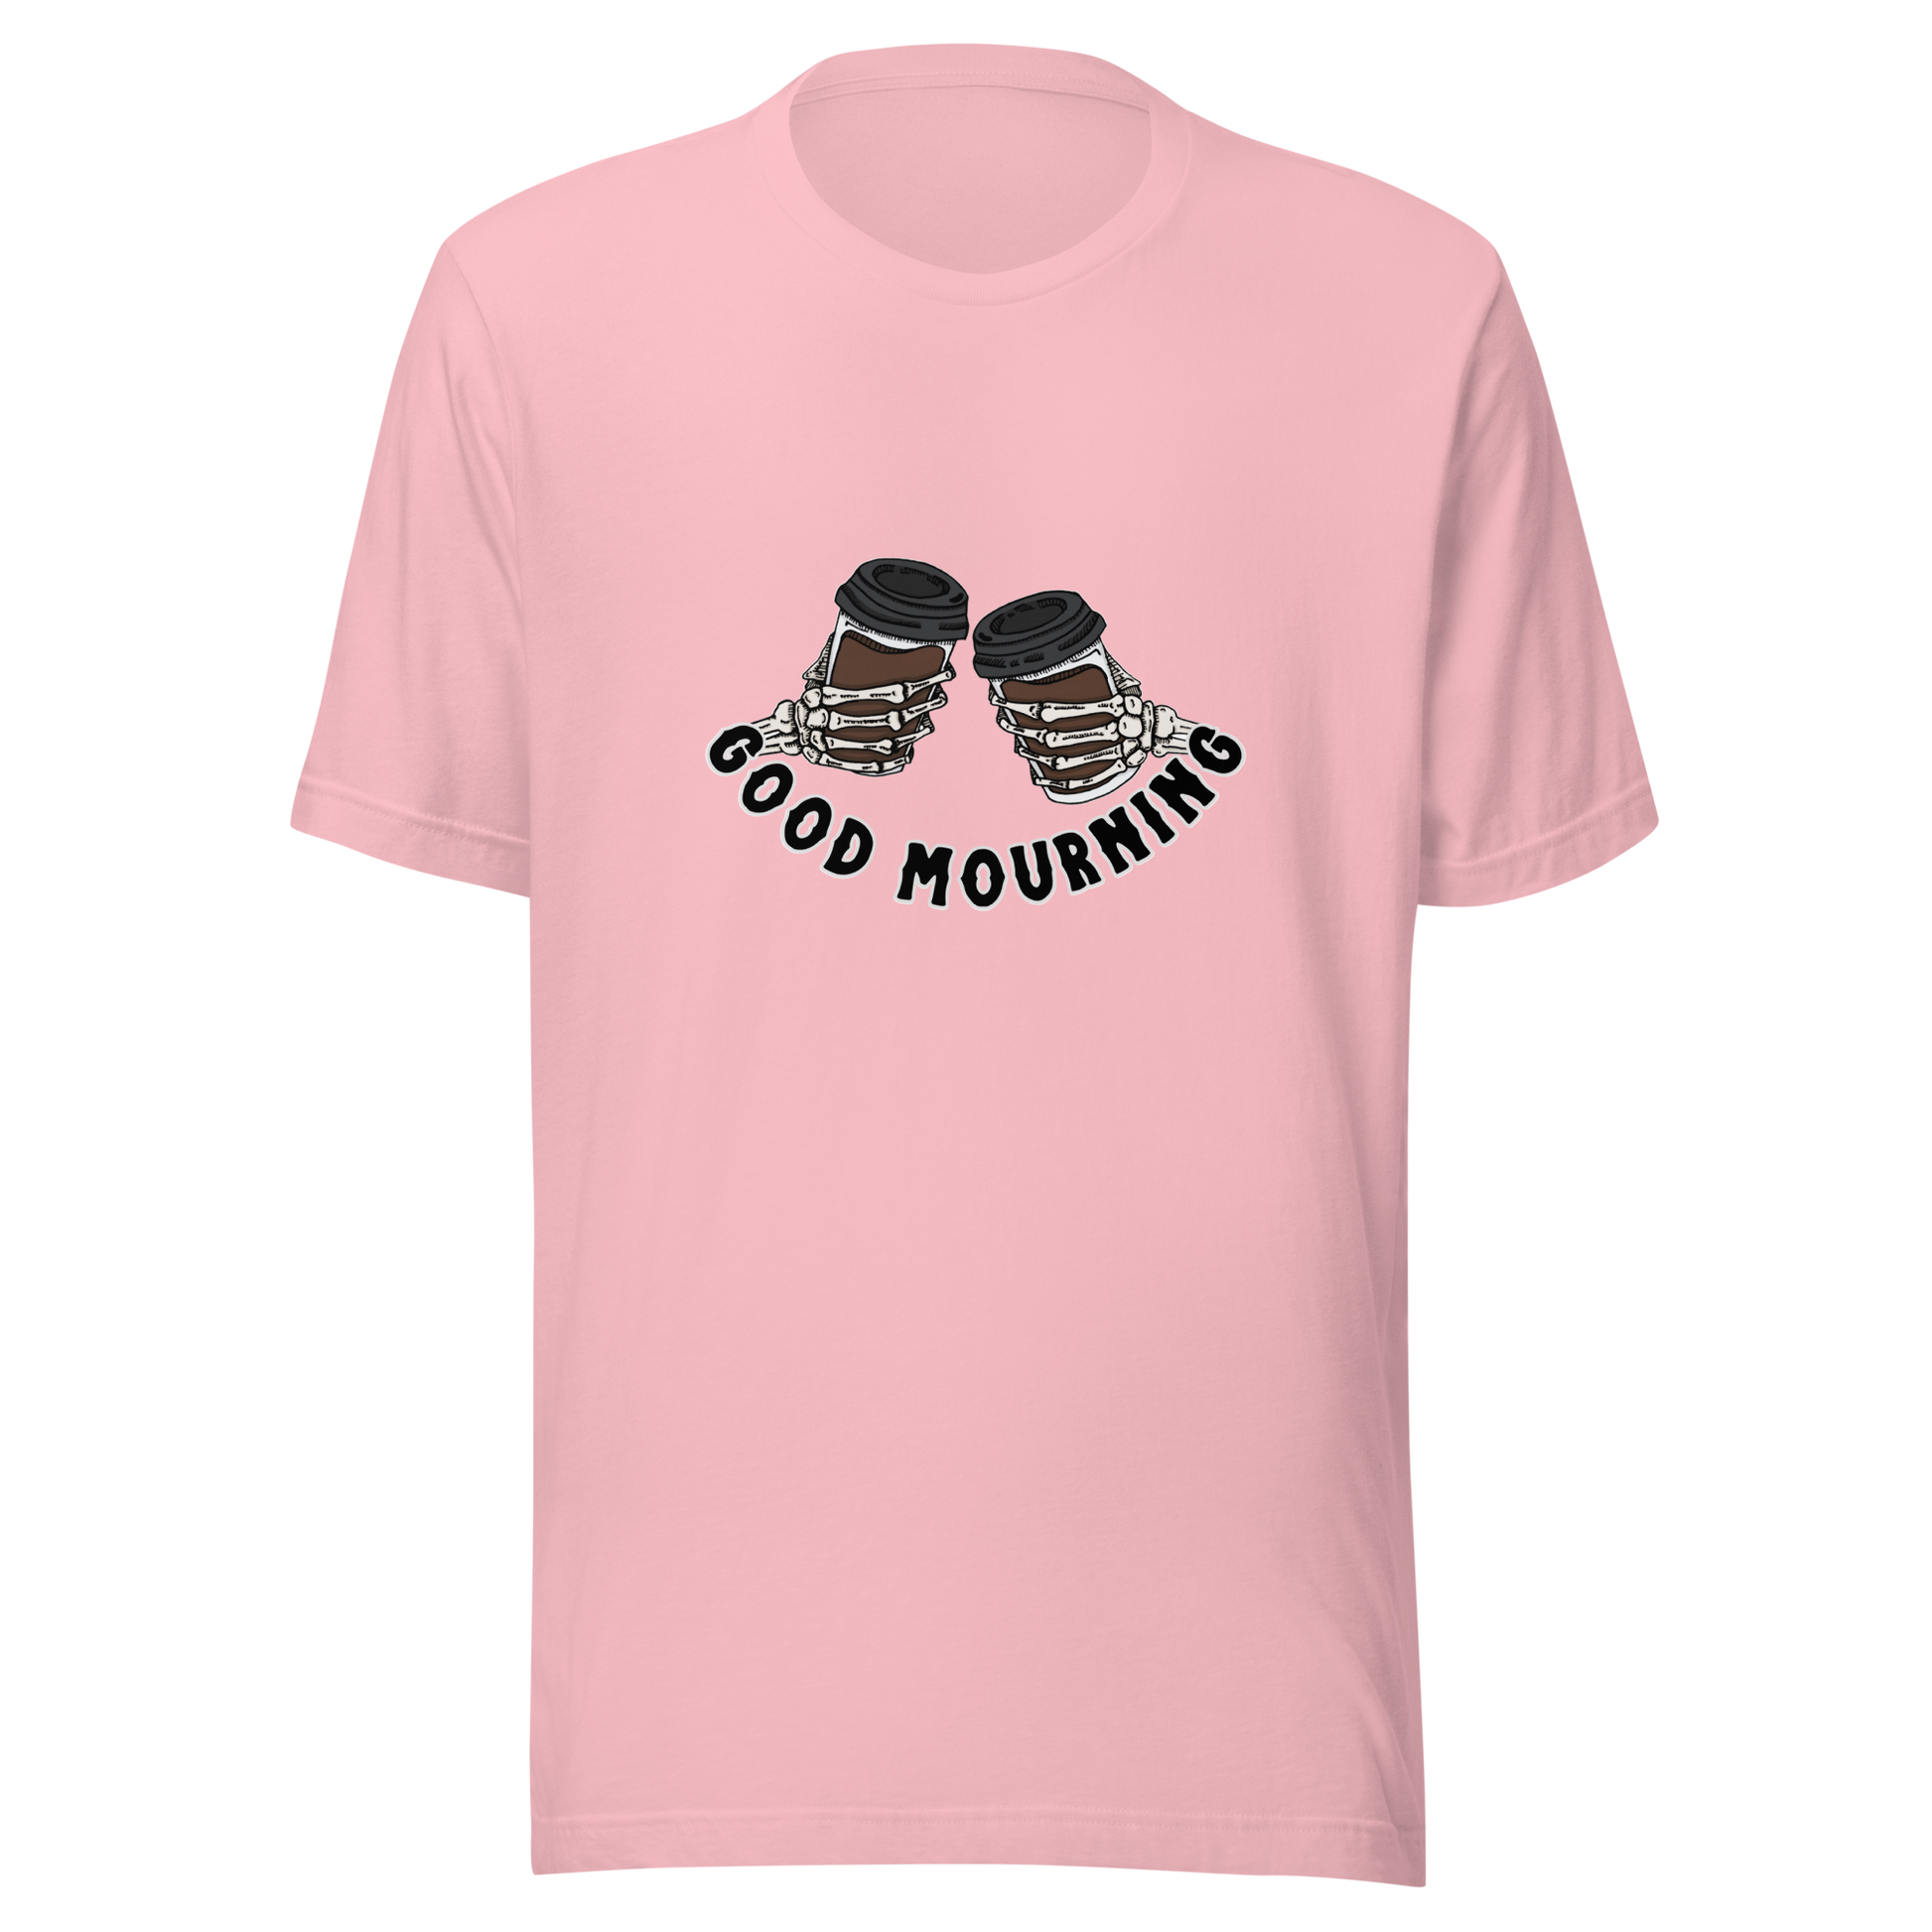 good mourning t-shirt in pink - gaslit apparel